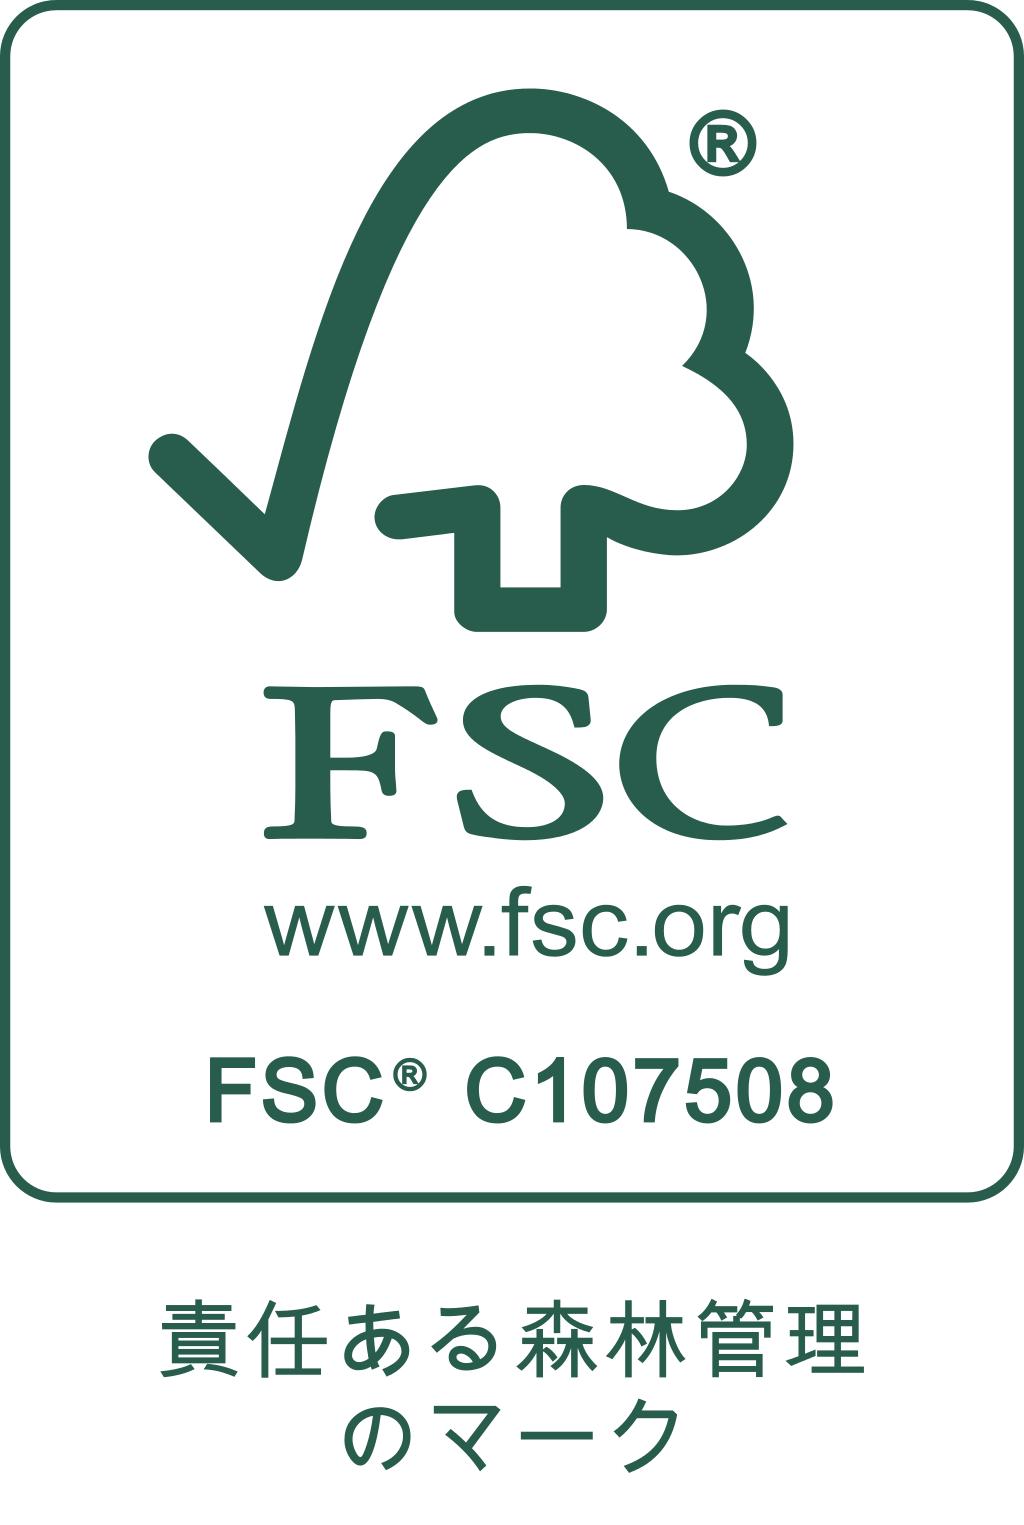 FSC-image